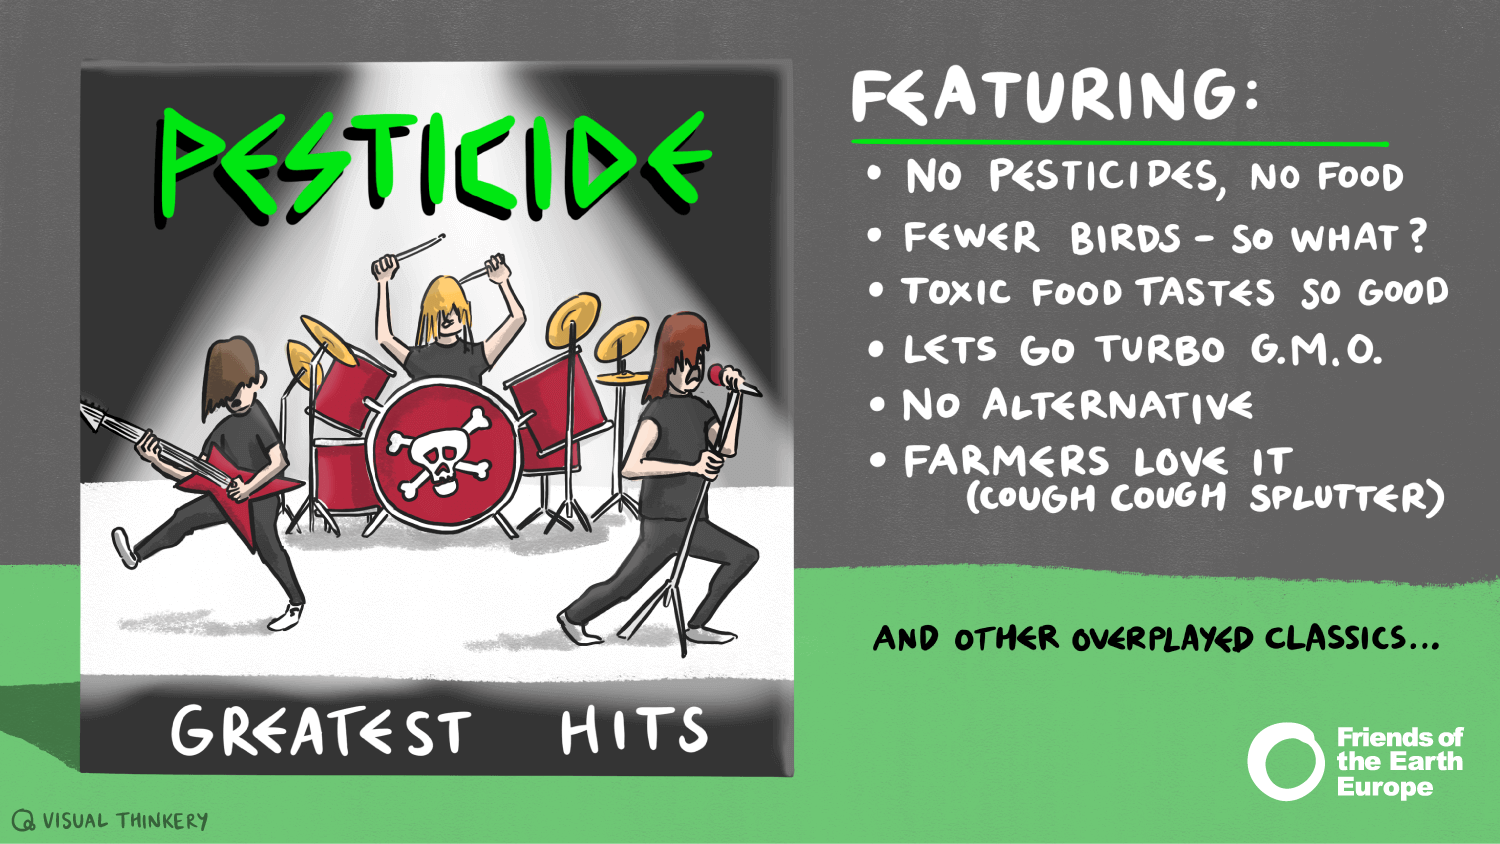 Pesticide - greatest hits